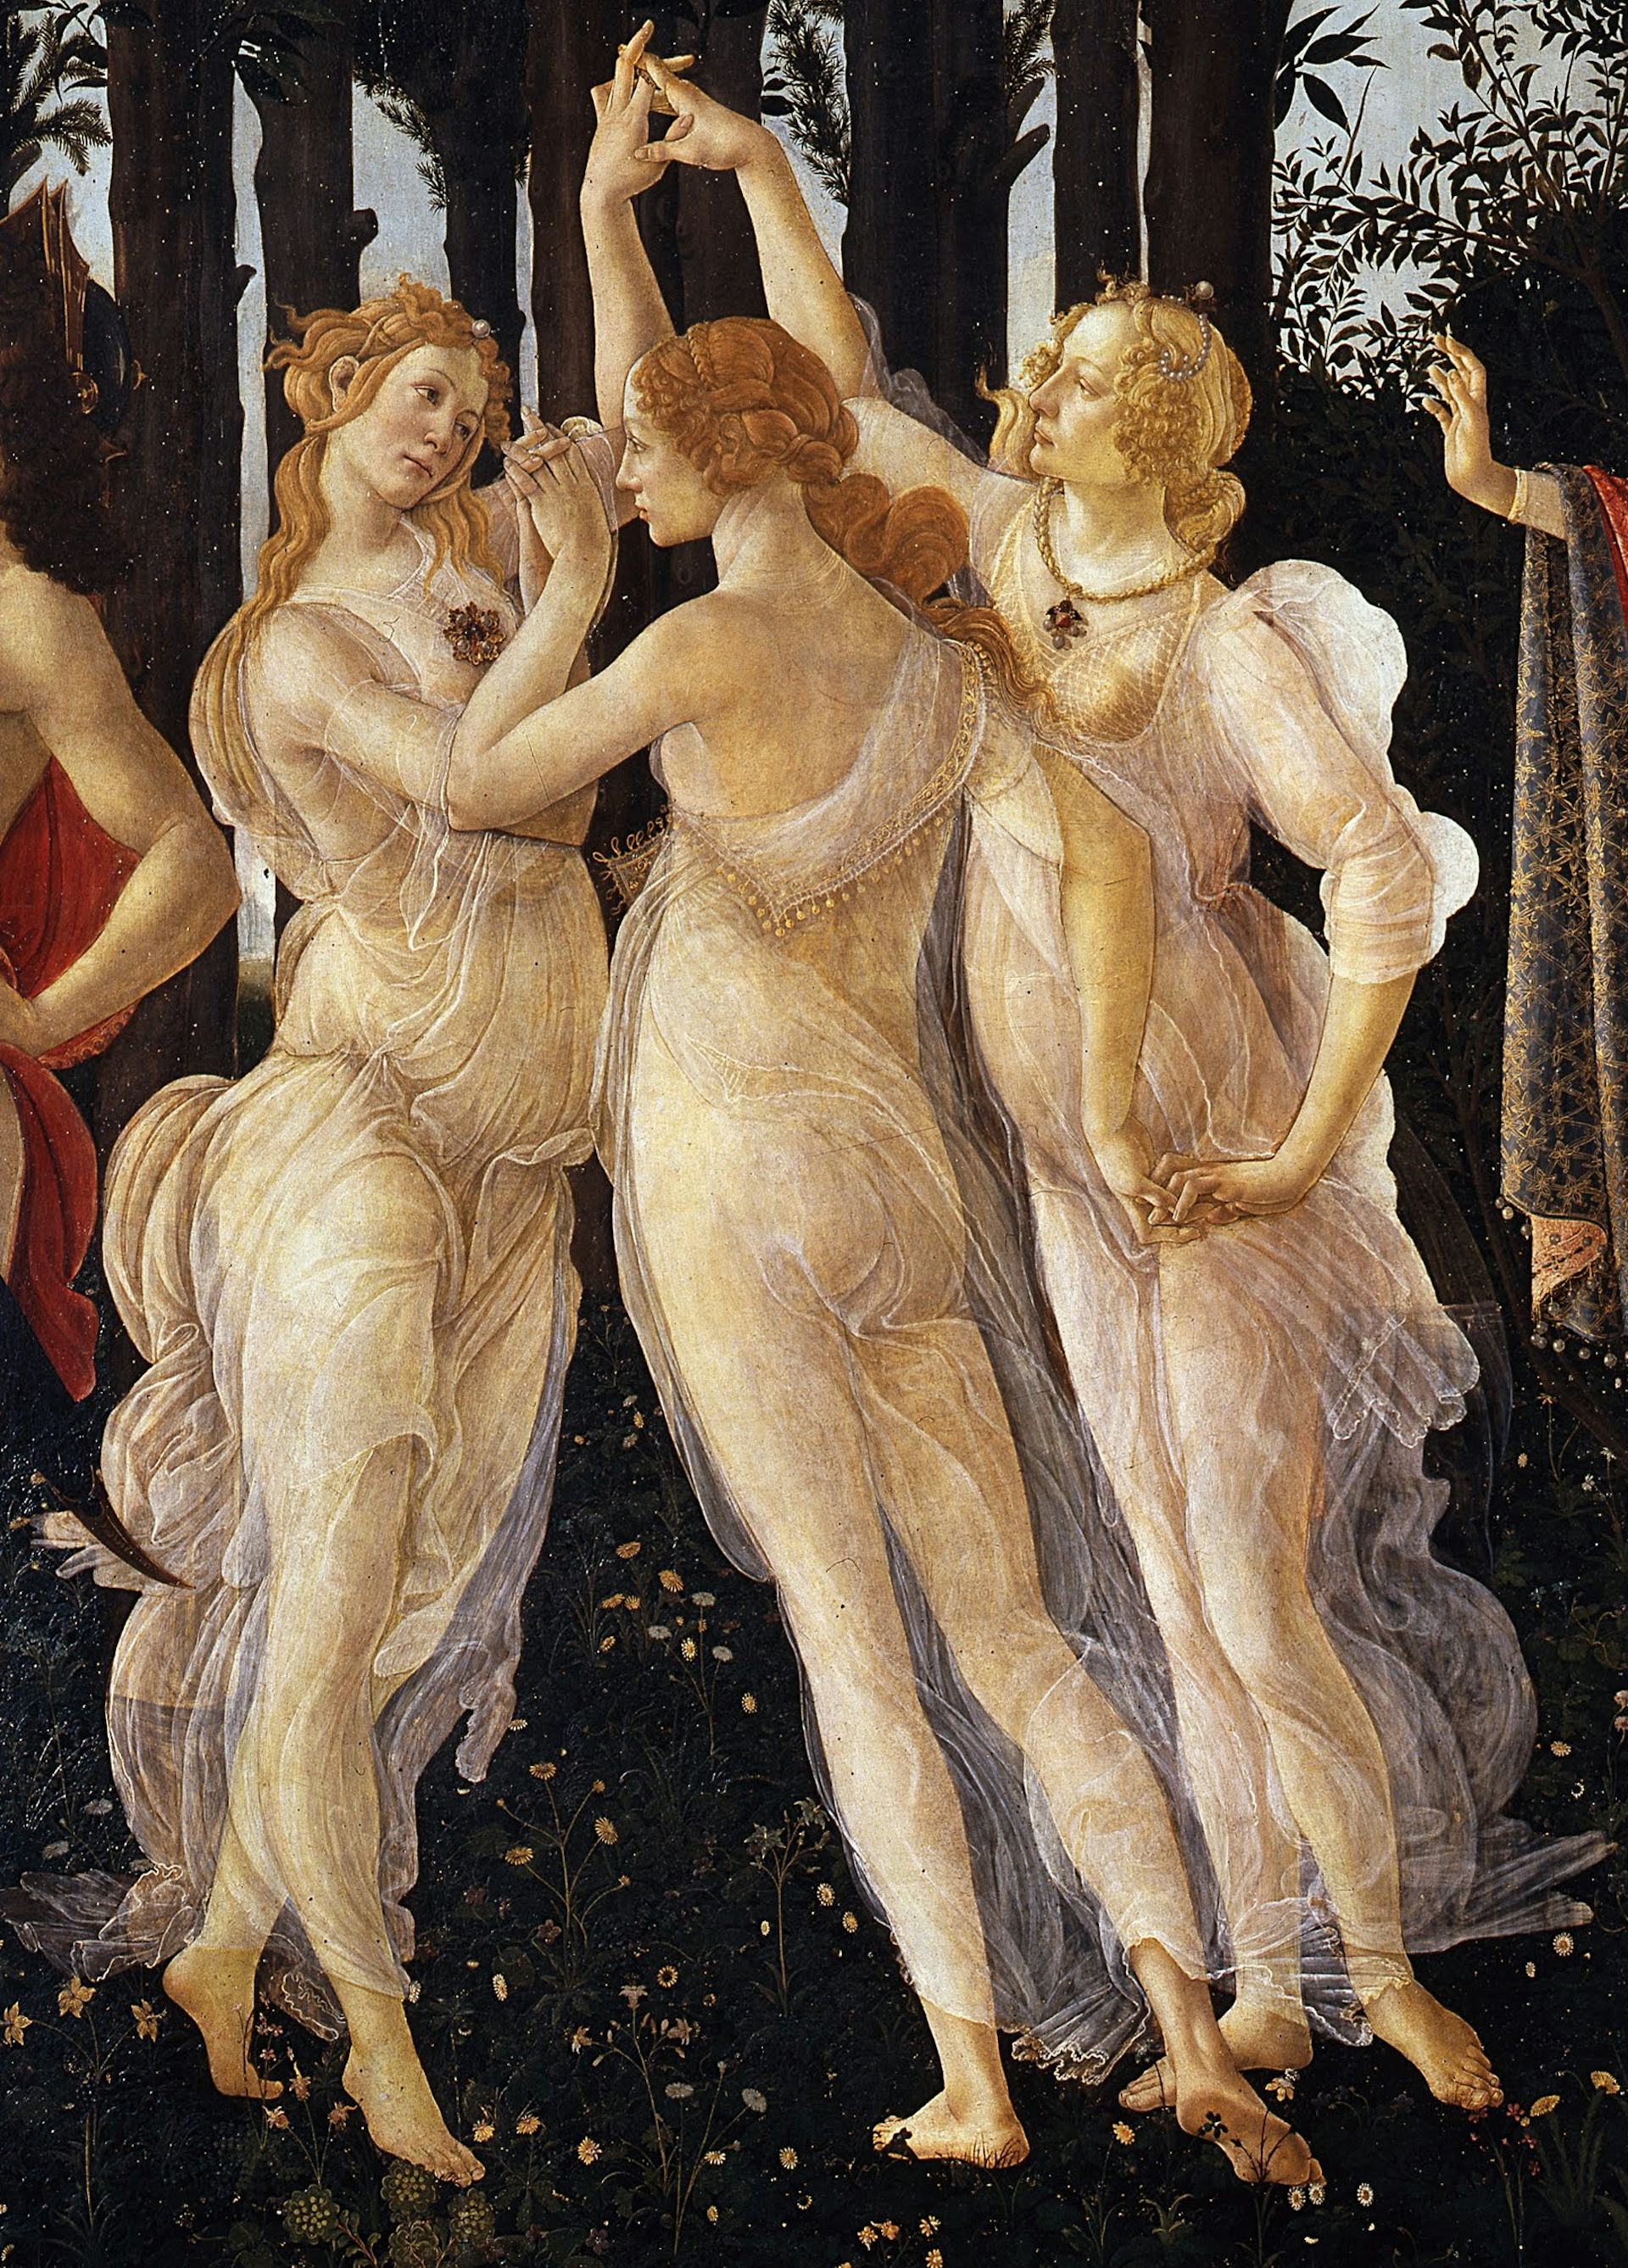 Detail from Primavera by Sandro Botticelli